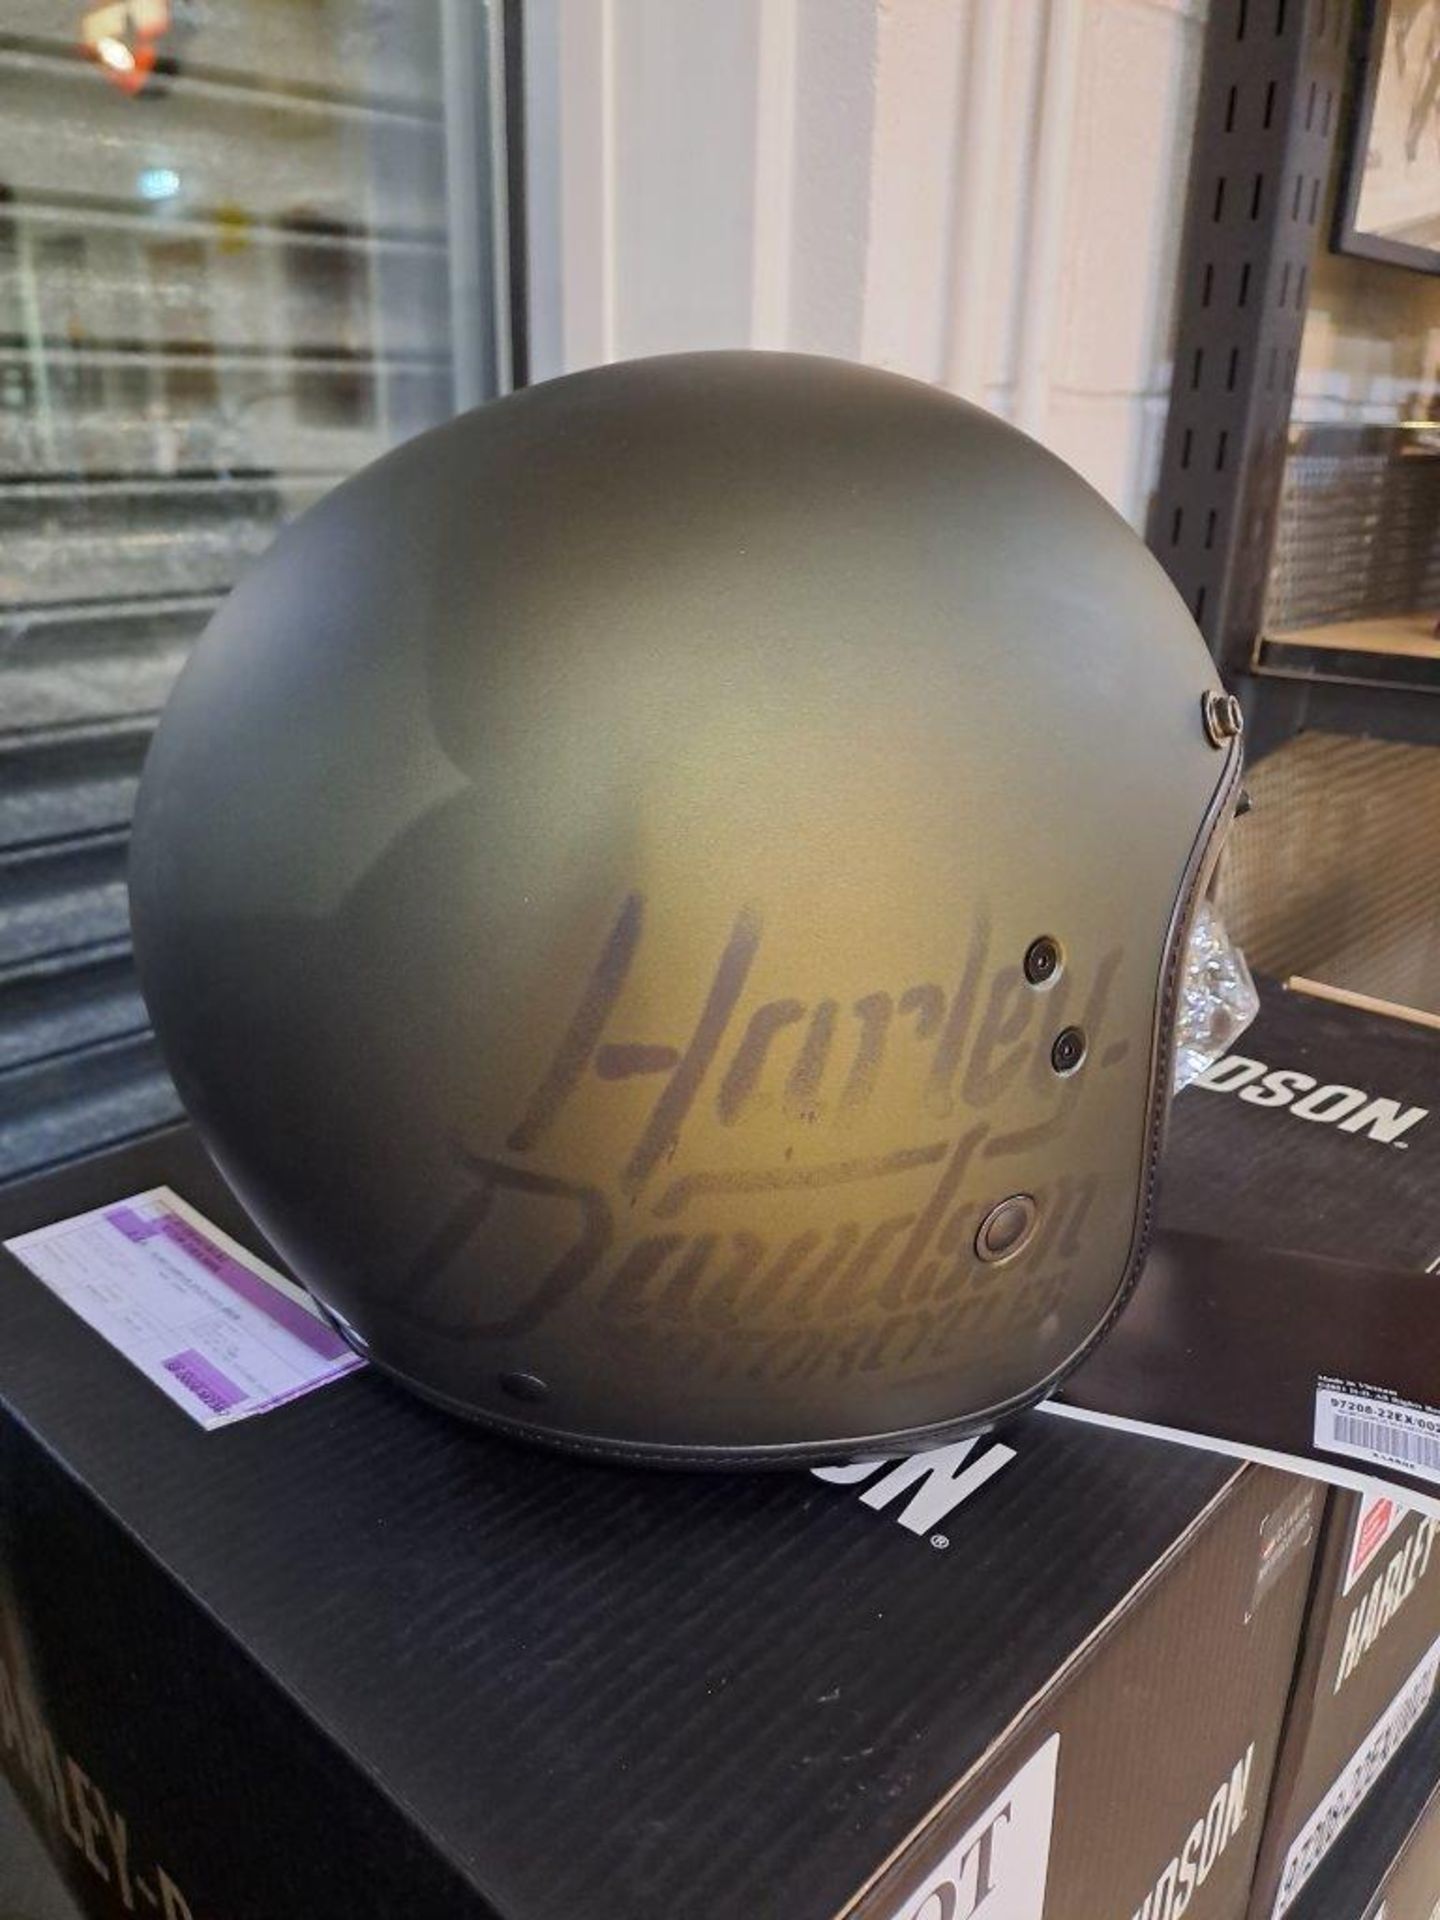 Harley Davidson 3/4 Surplus Medium Helmet - Image 2 of 8